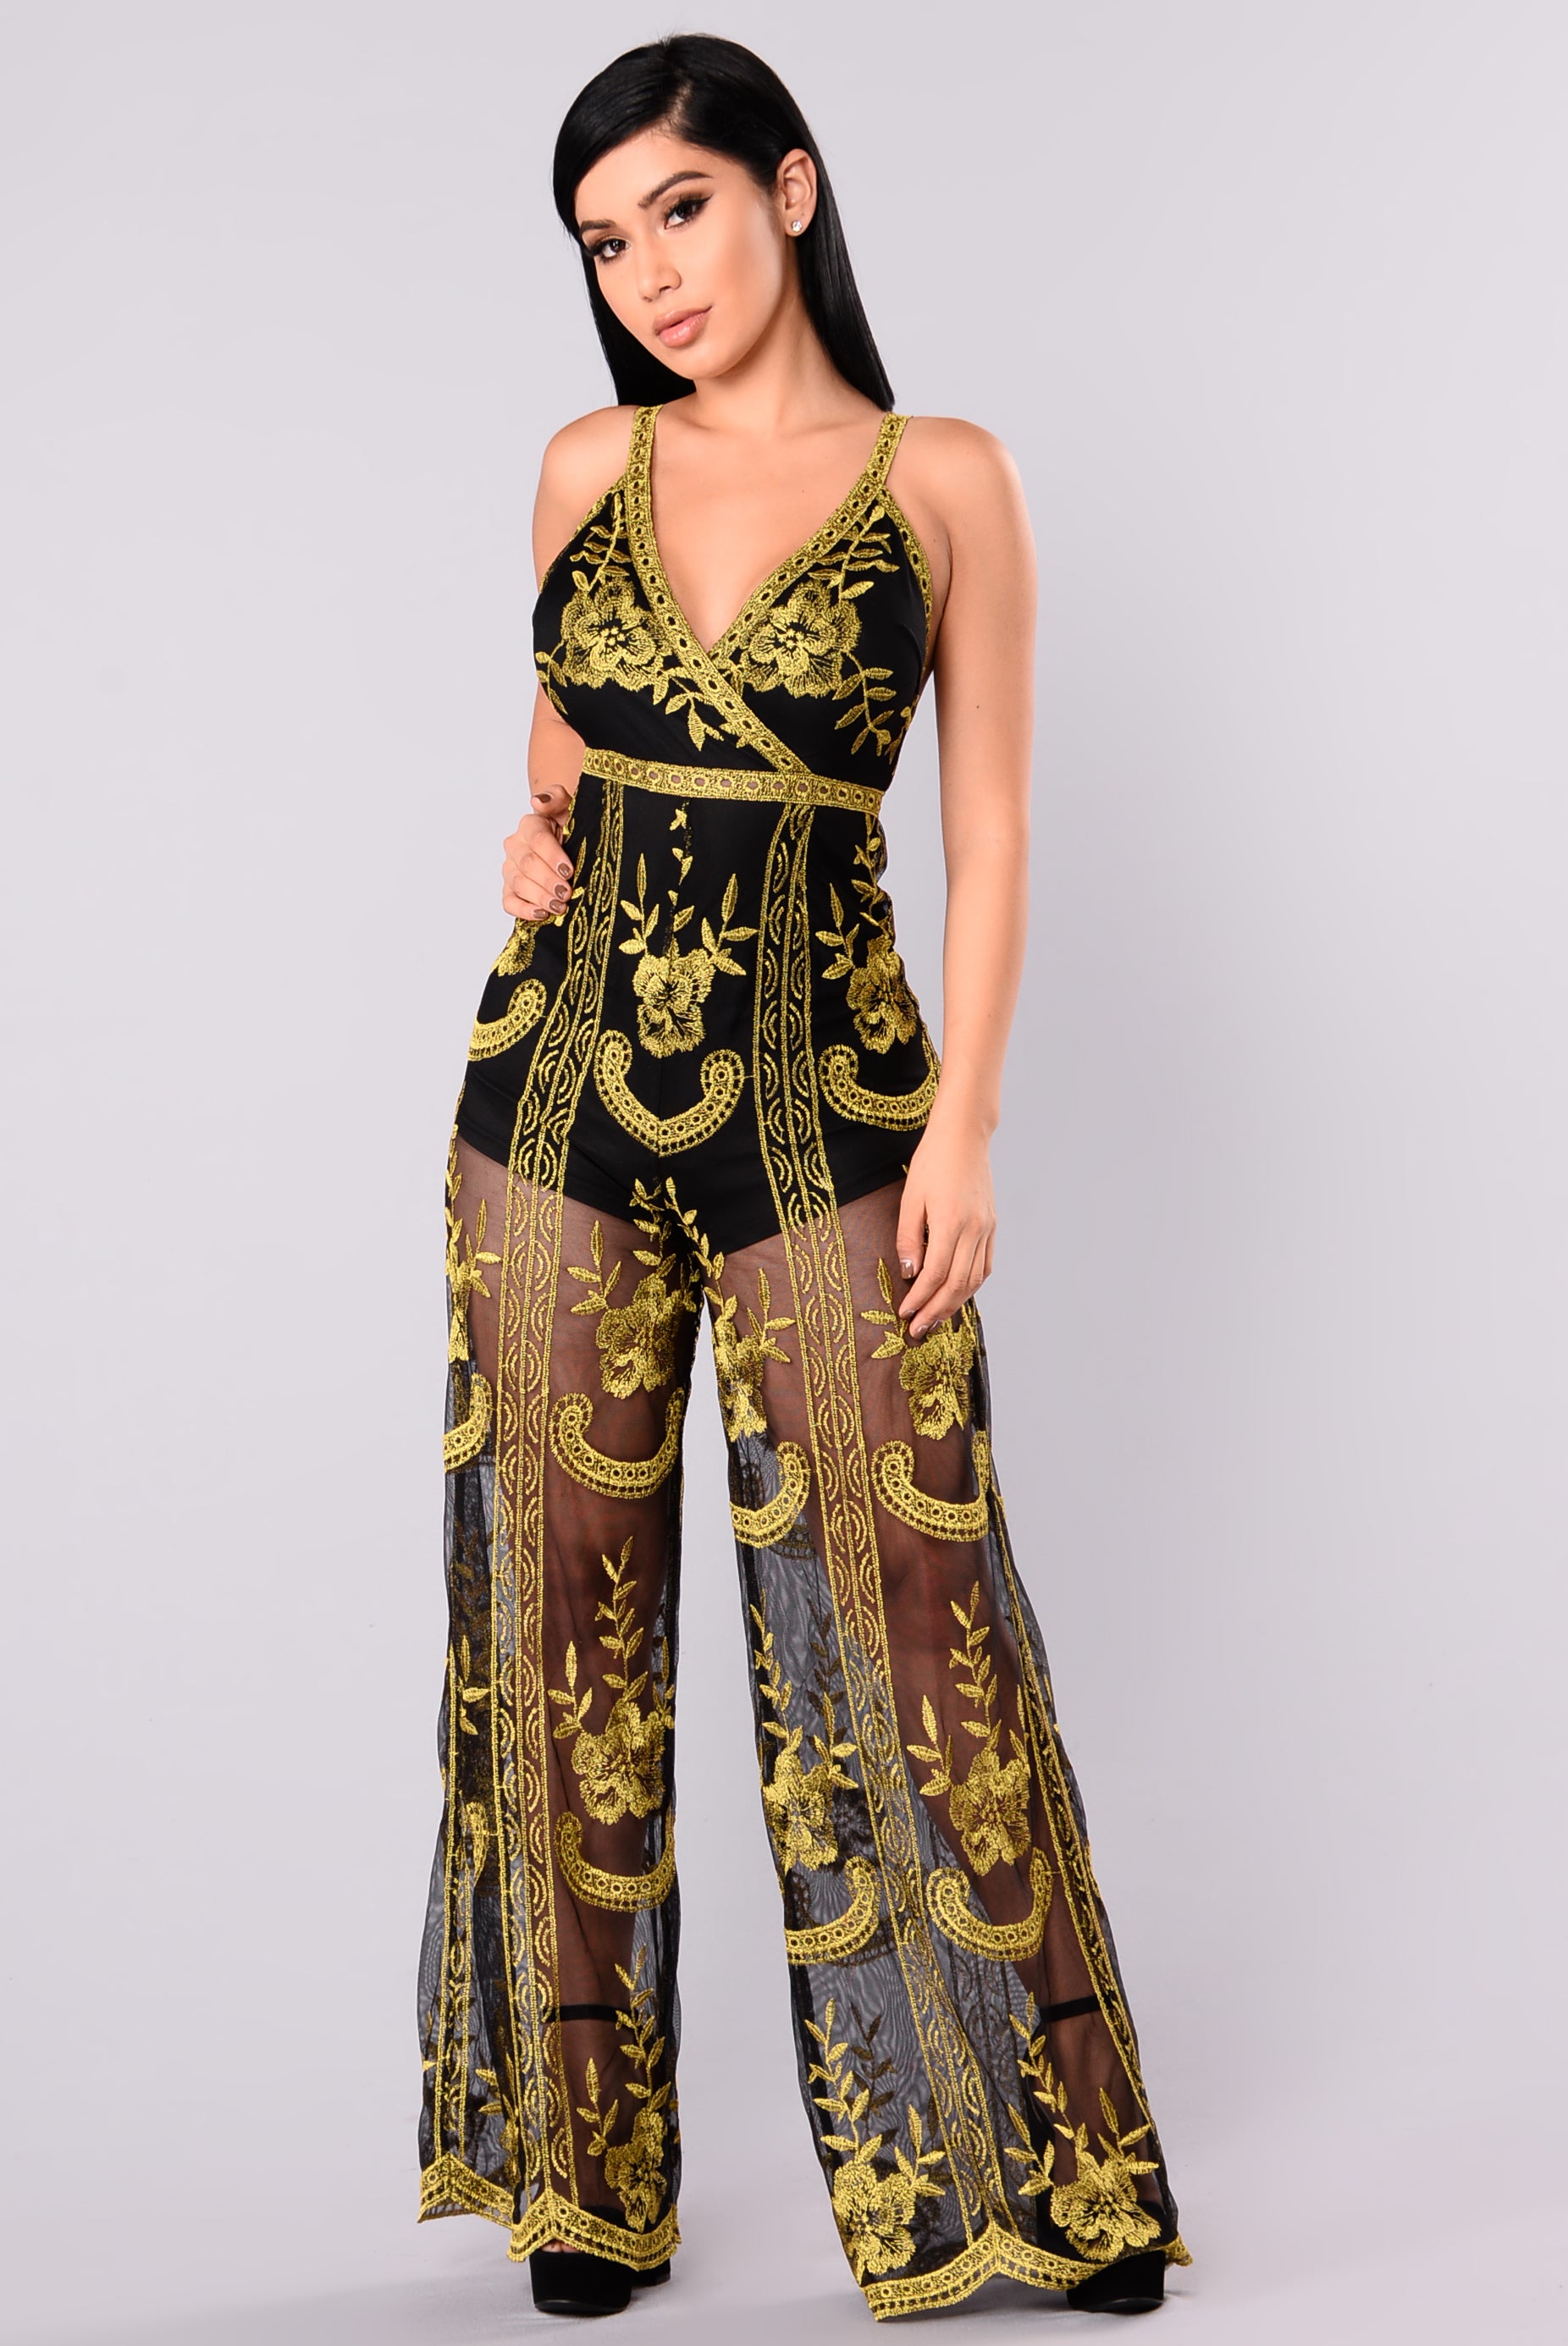 fashion nova black and gold jumpsuit